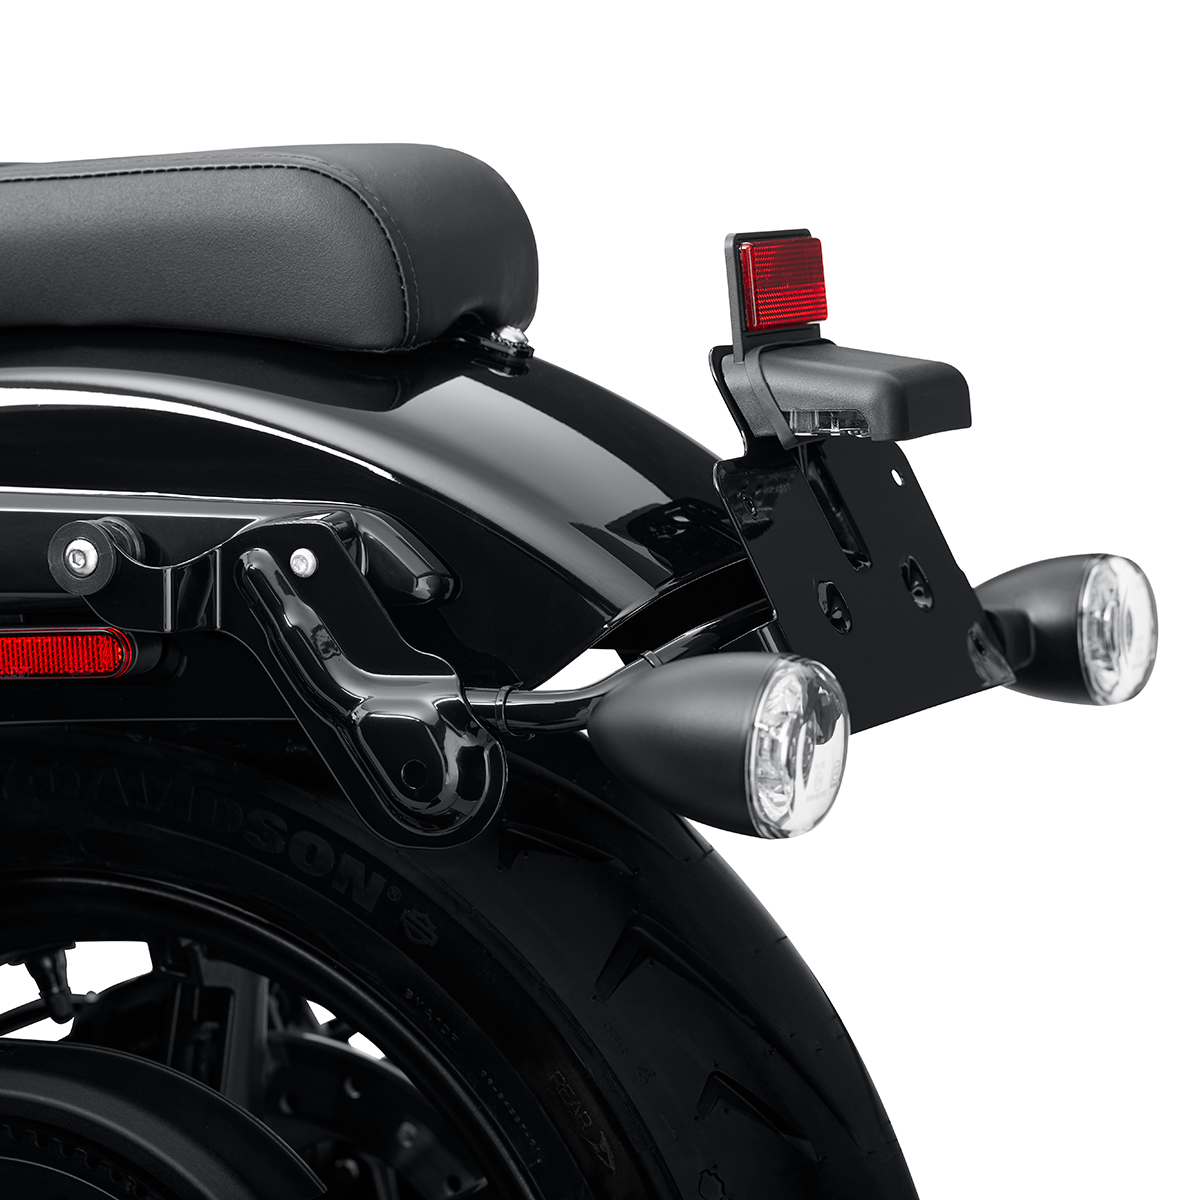 Harley-Davidson Turn Signal Relocation Kit